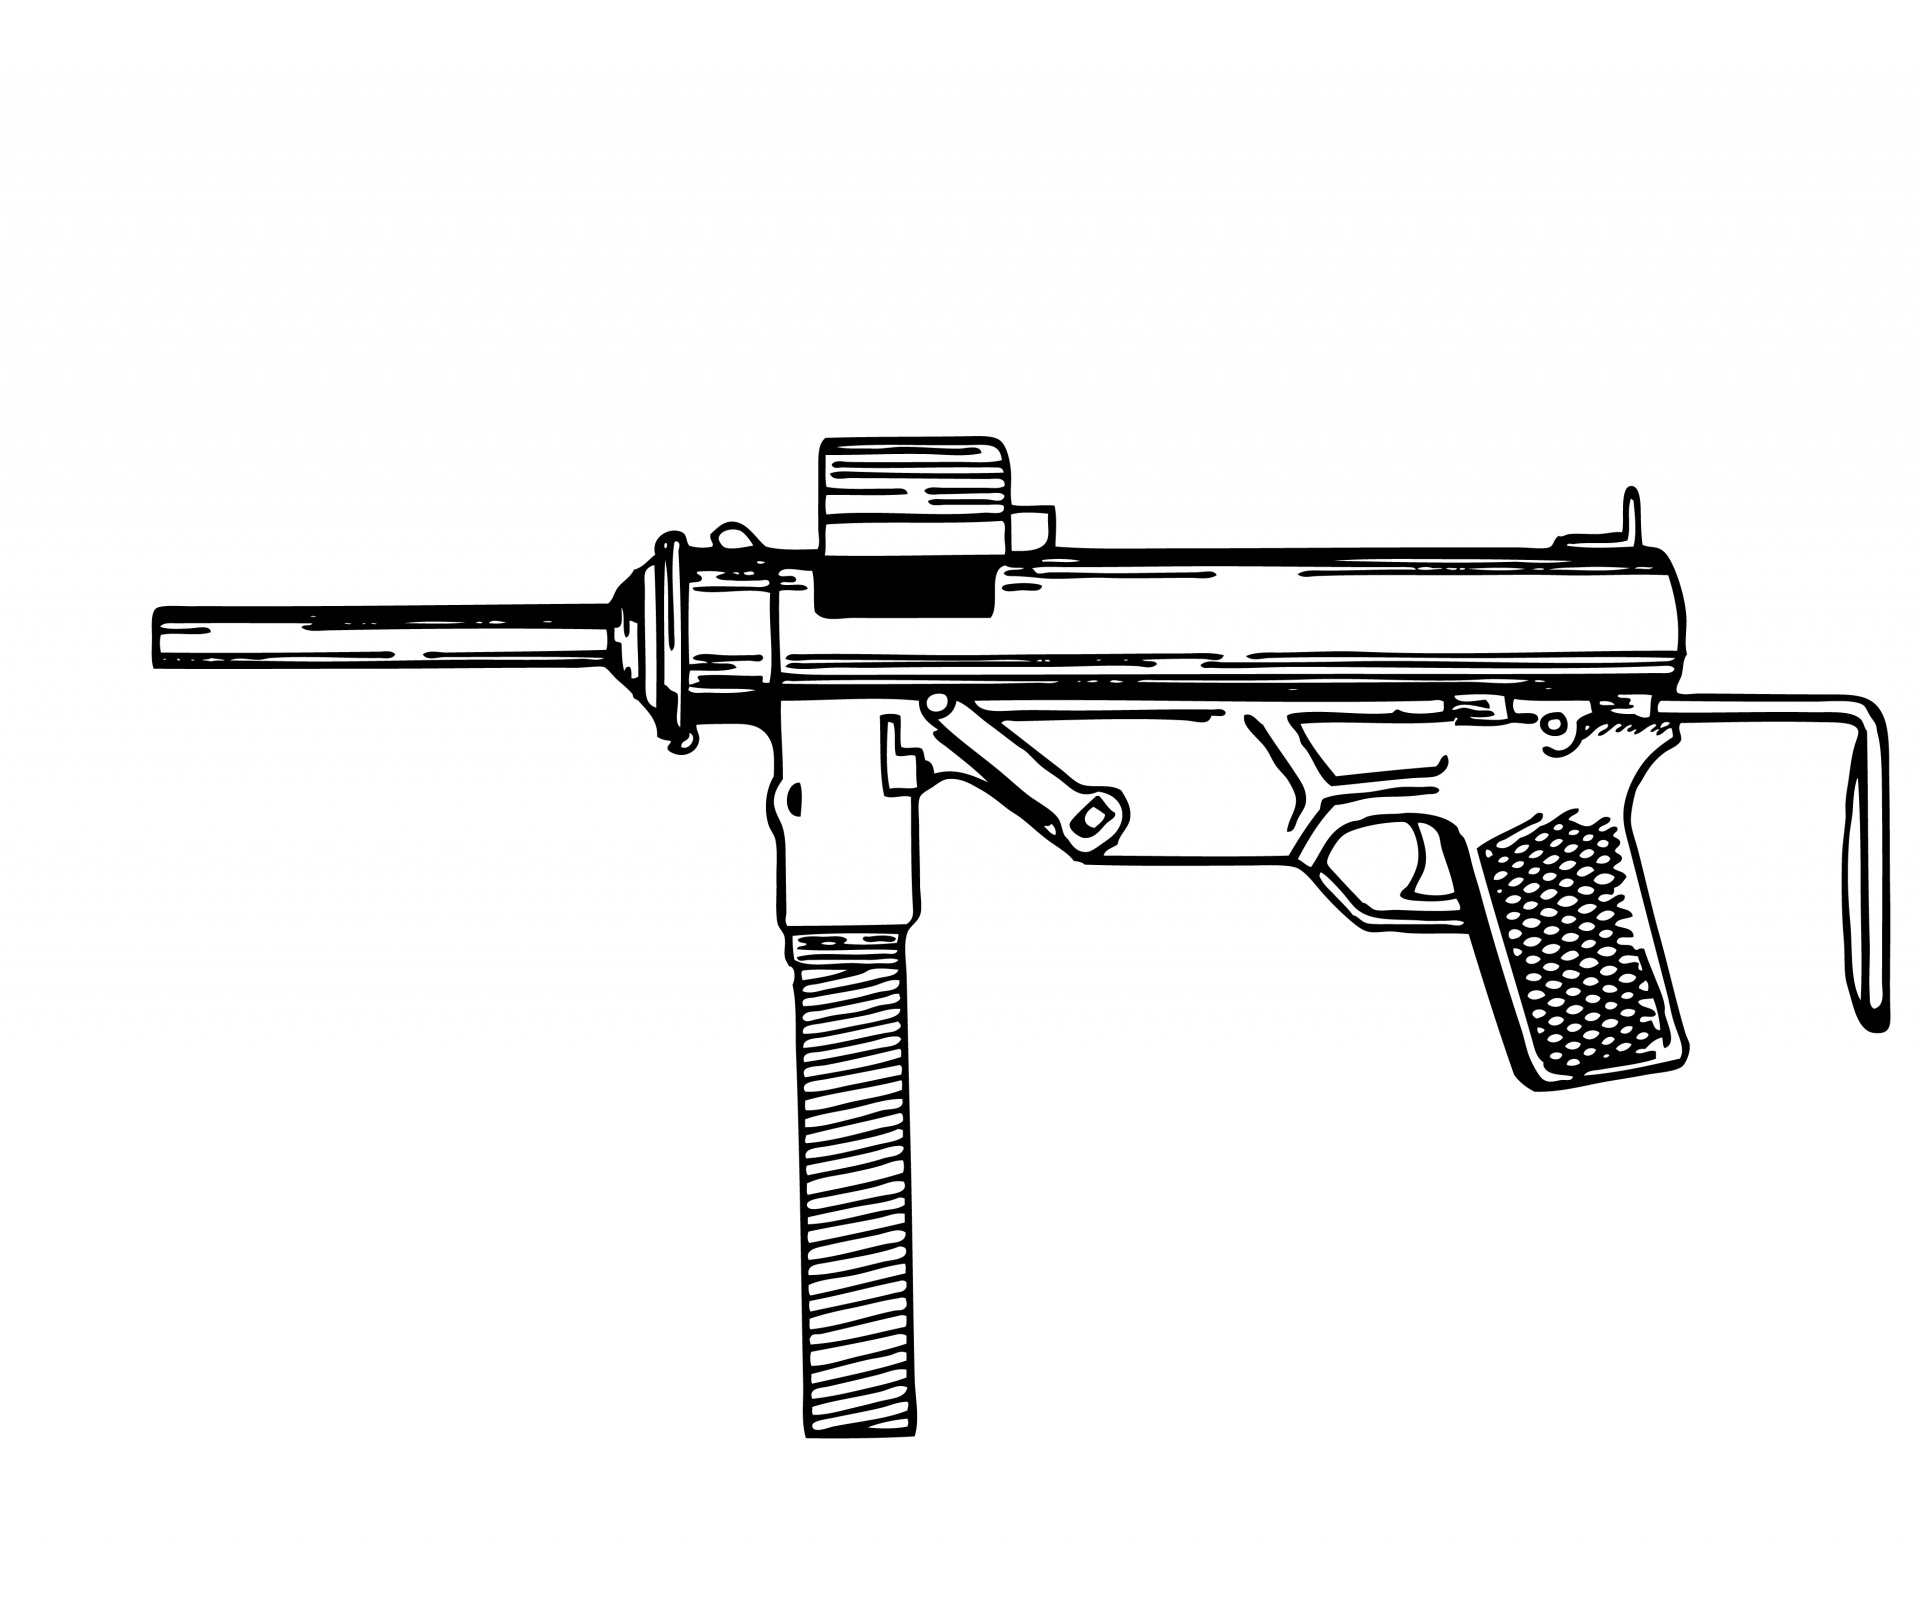 Submachine Gun Illustration Clipart Free Stock Photo - Public Domain